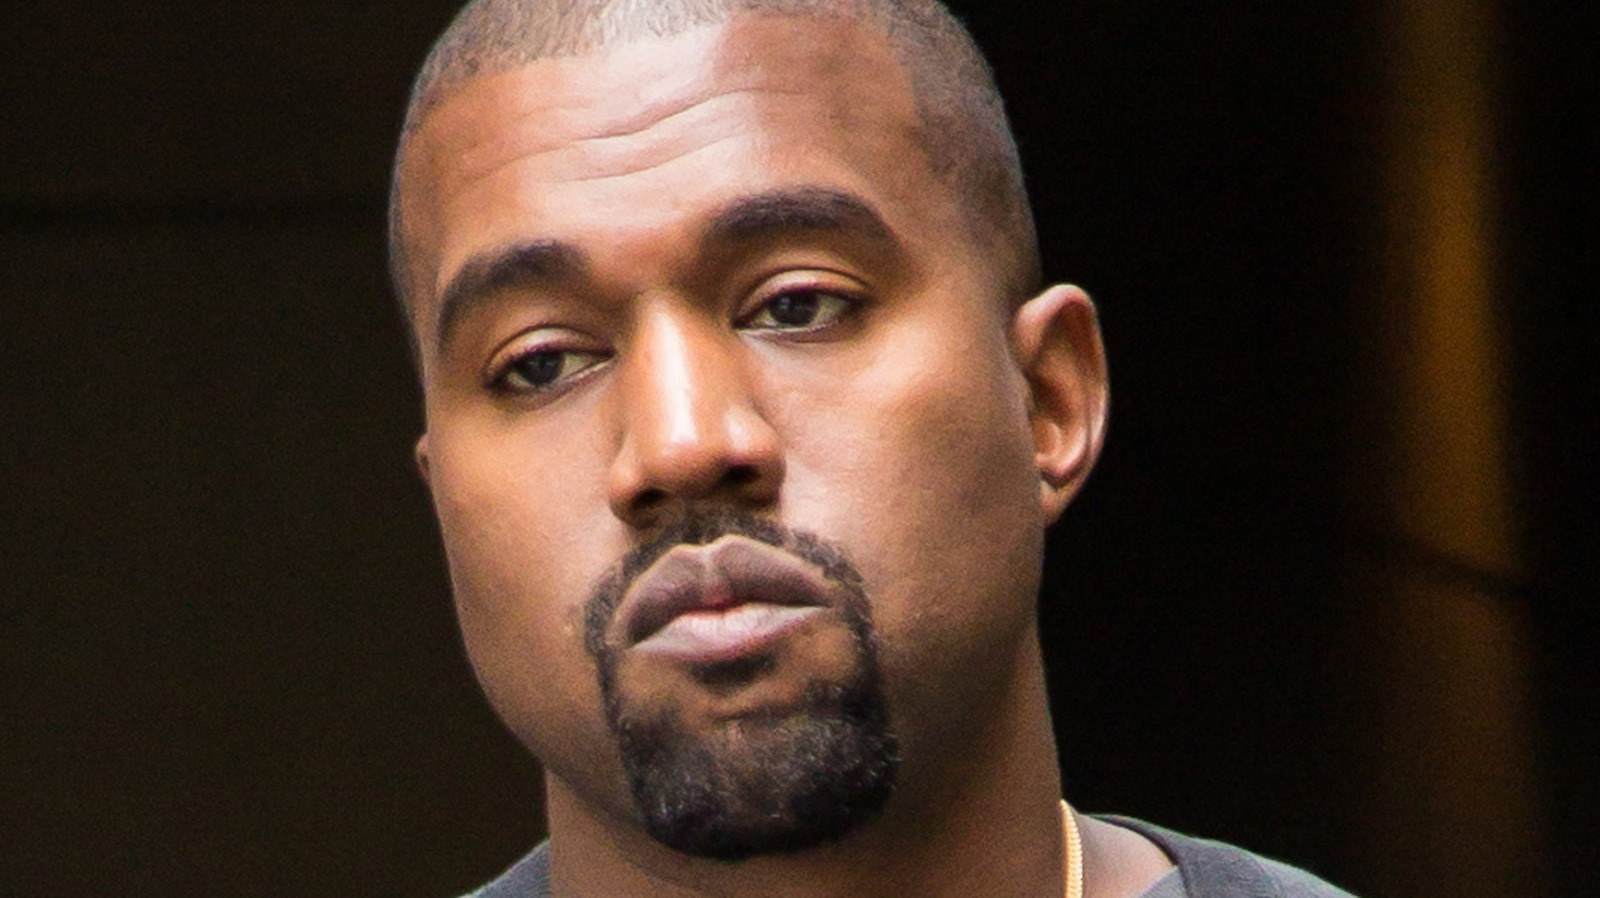 What Kanye West Asked For In Response To Kim Kardashian's Divorce Filing